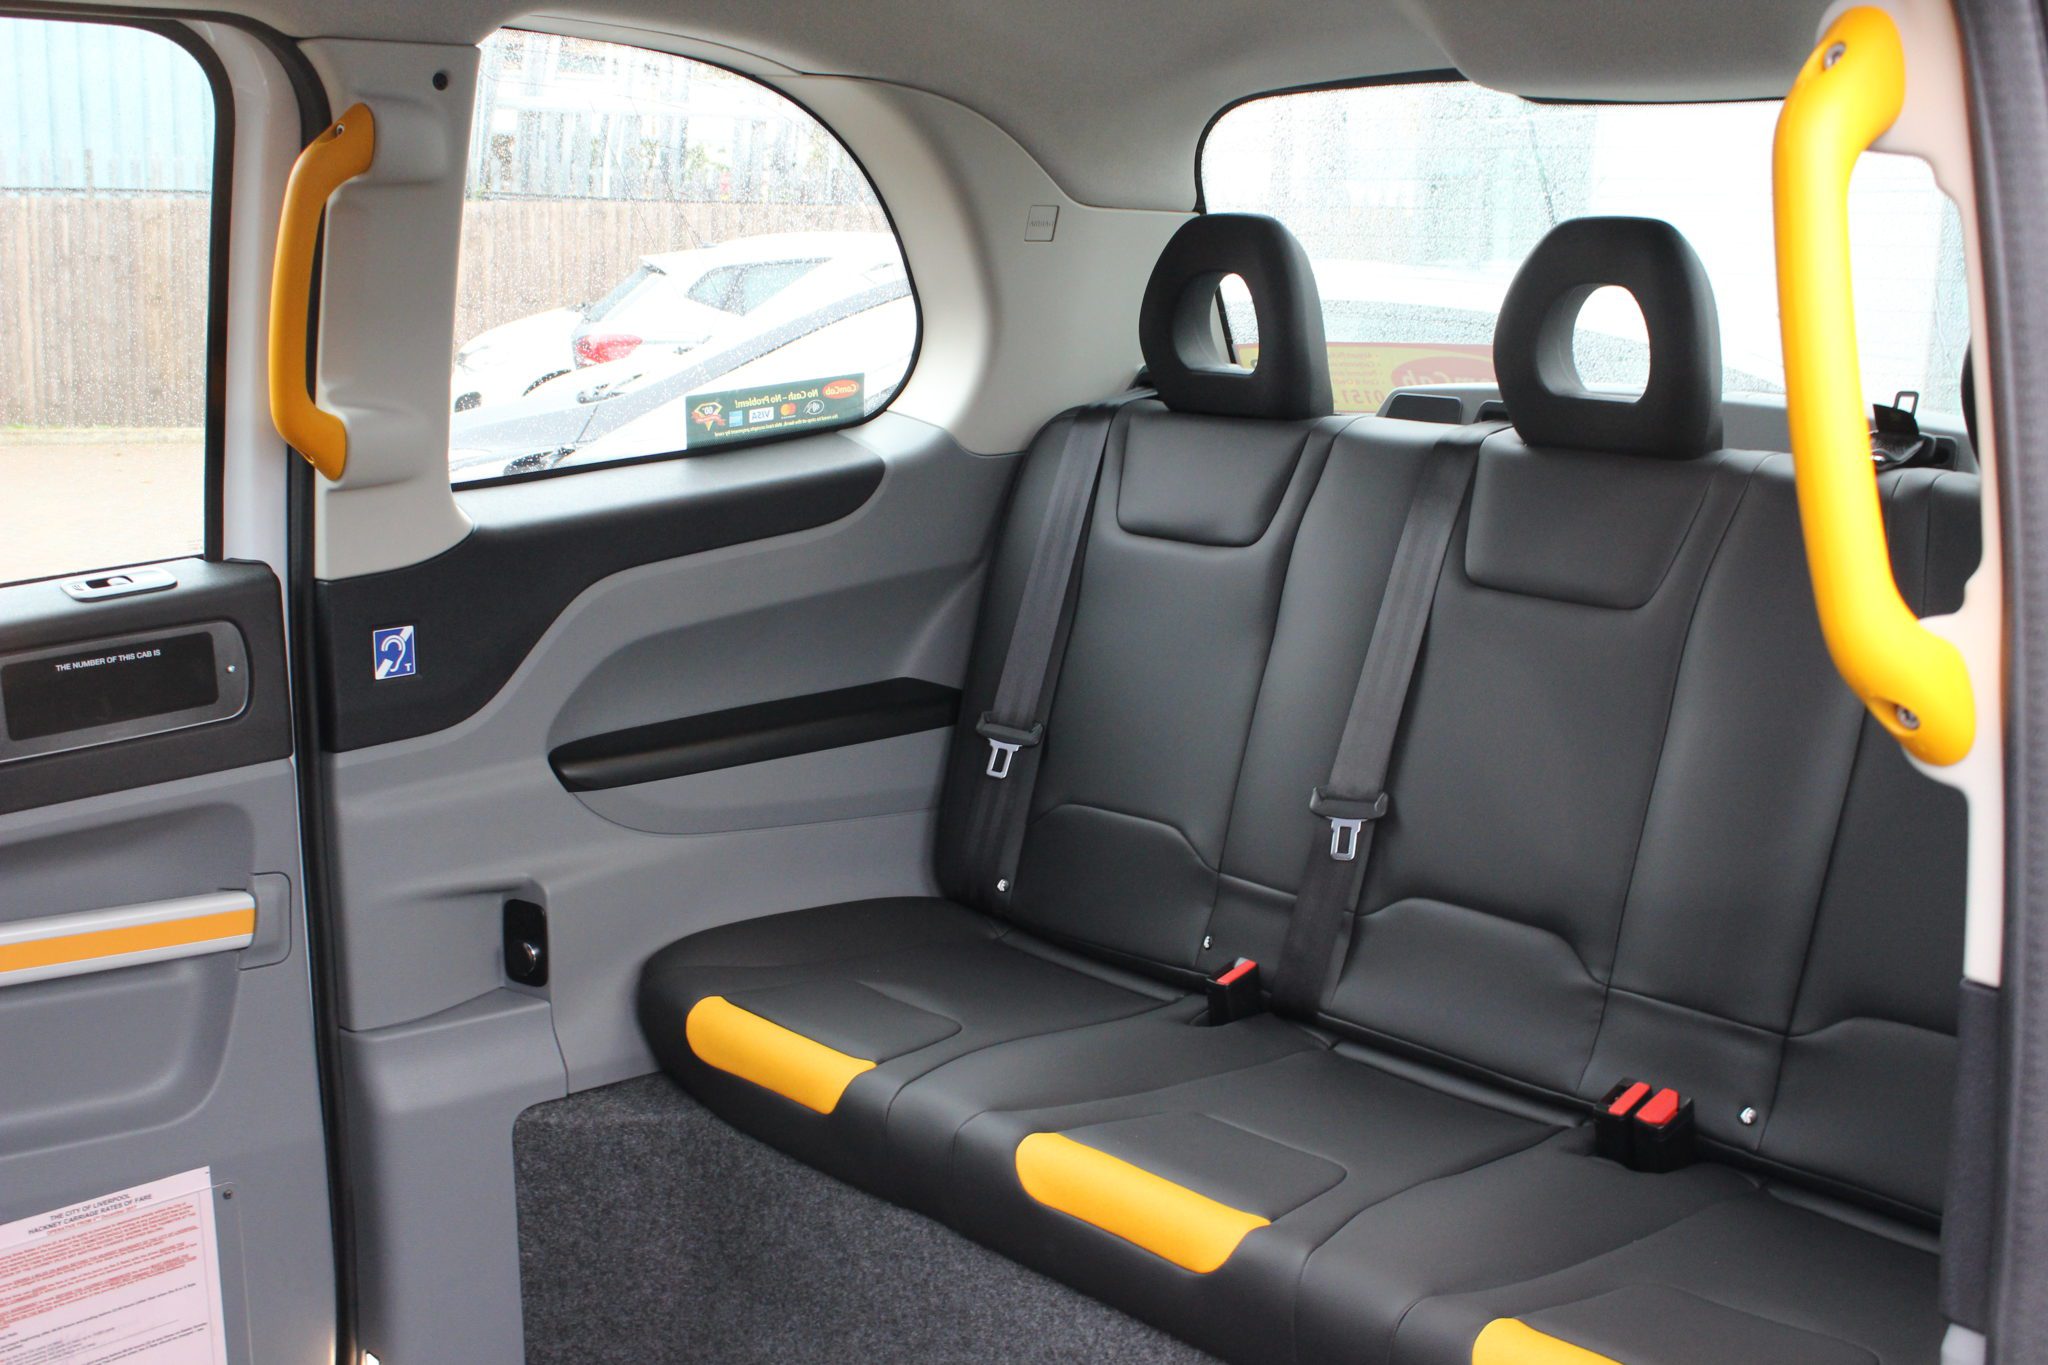 Electric Black Cab passenger seats